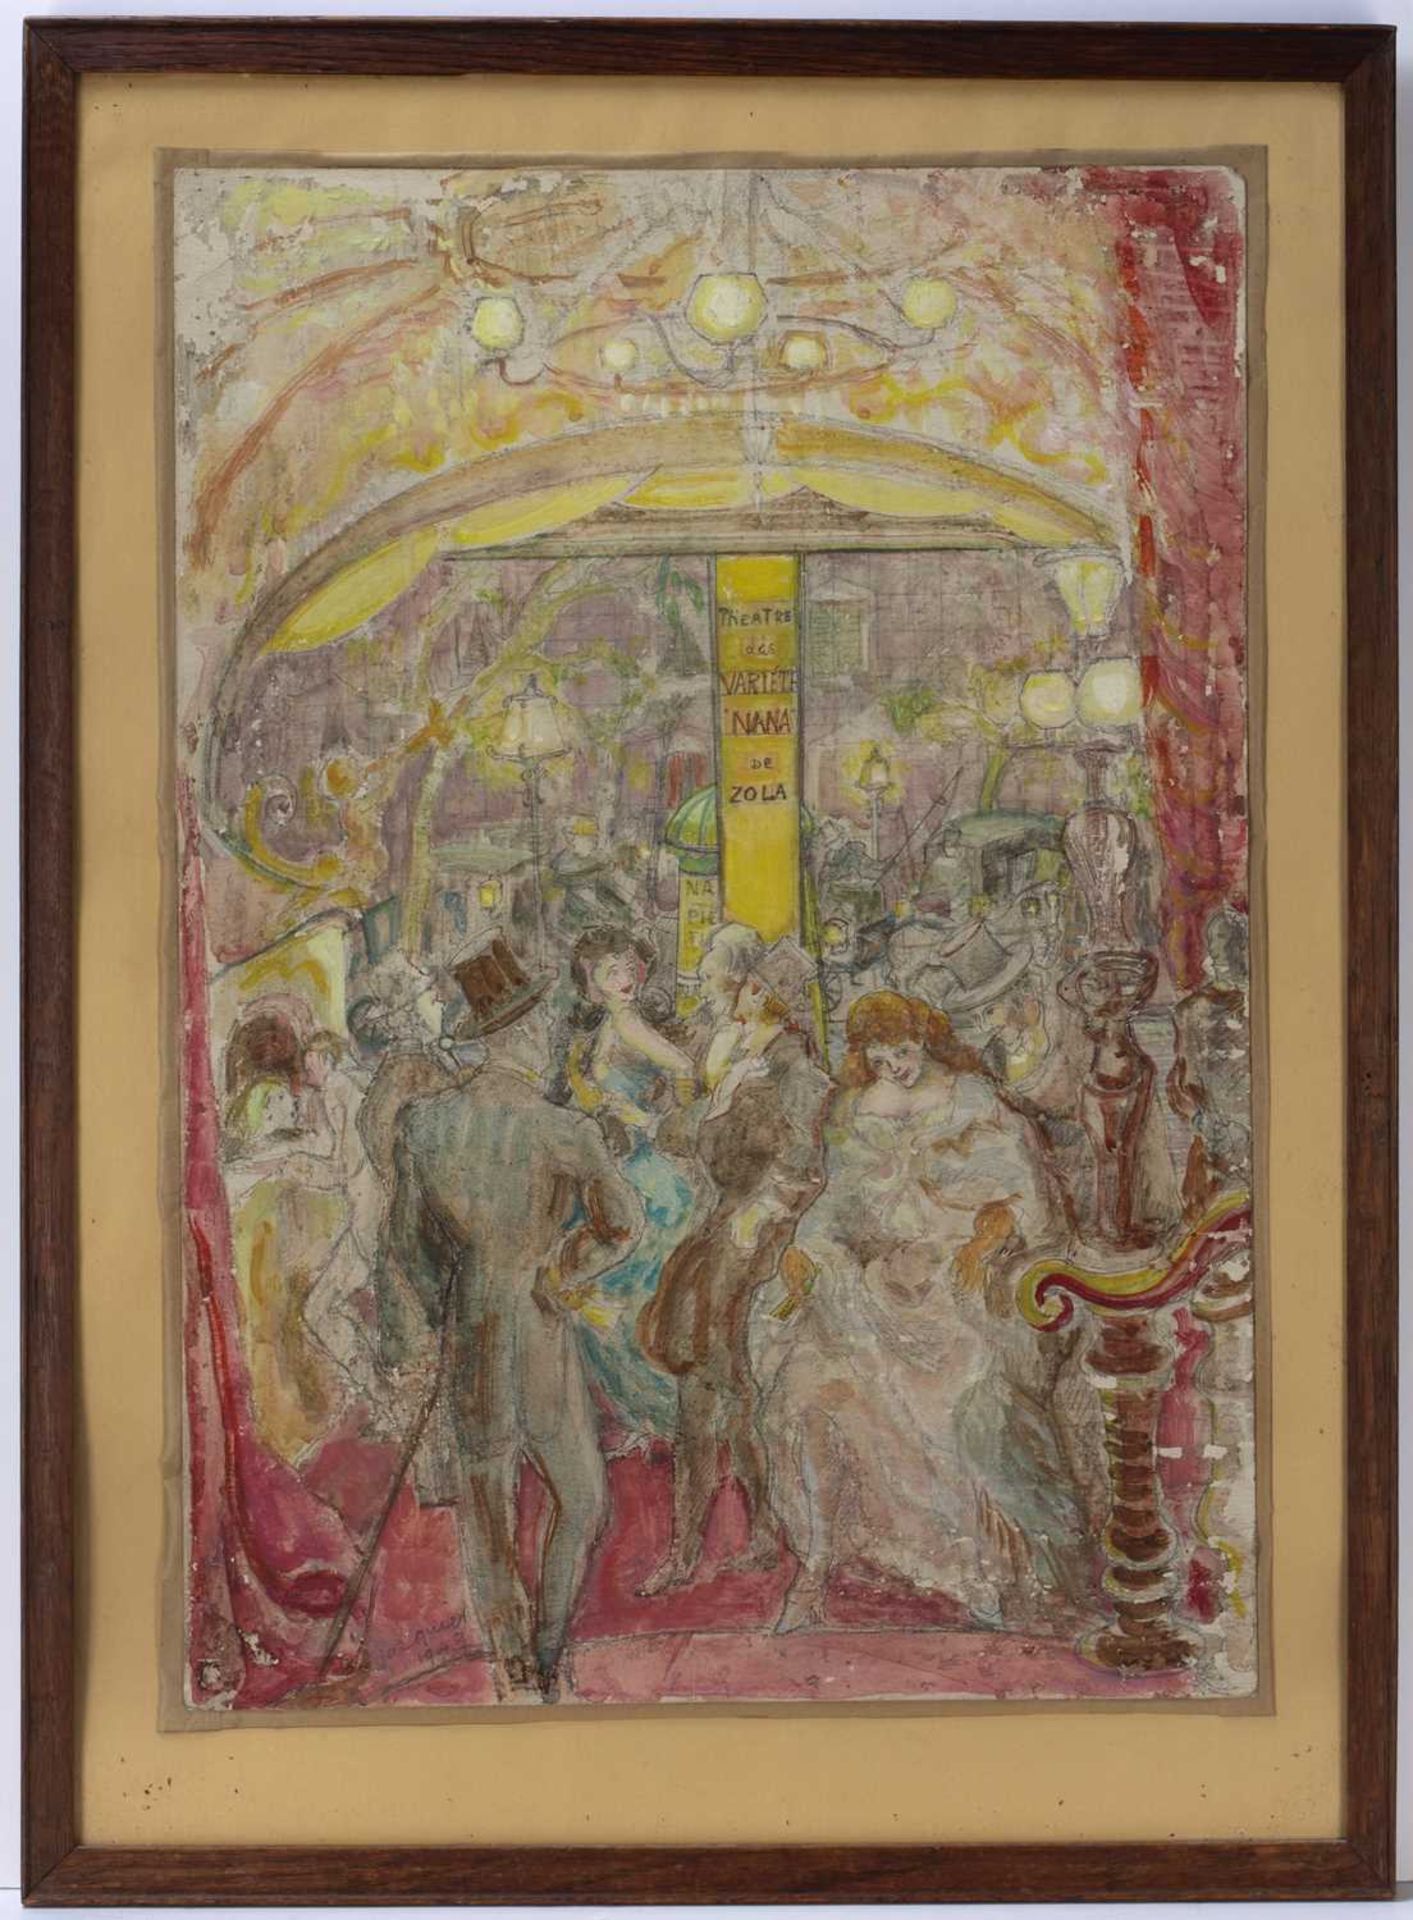 Jacquier (20th Century French School) 'Theatre des Variete Nana De Zola', watercolour, signed and - Image 2 of 3